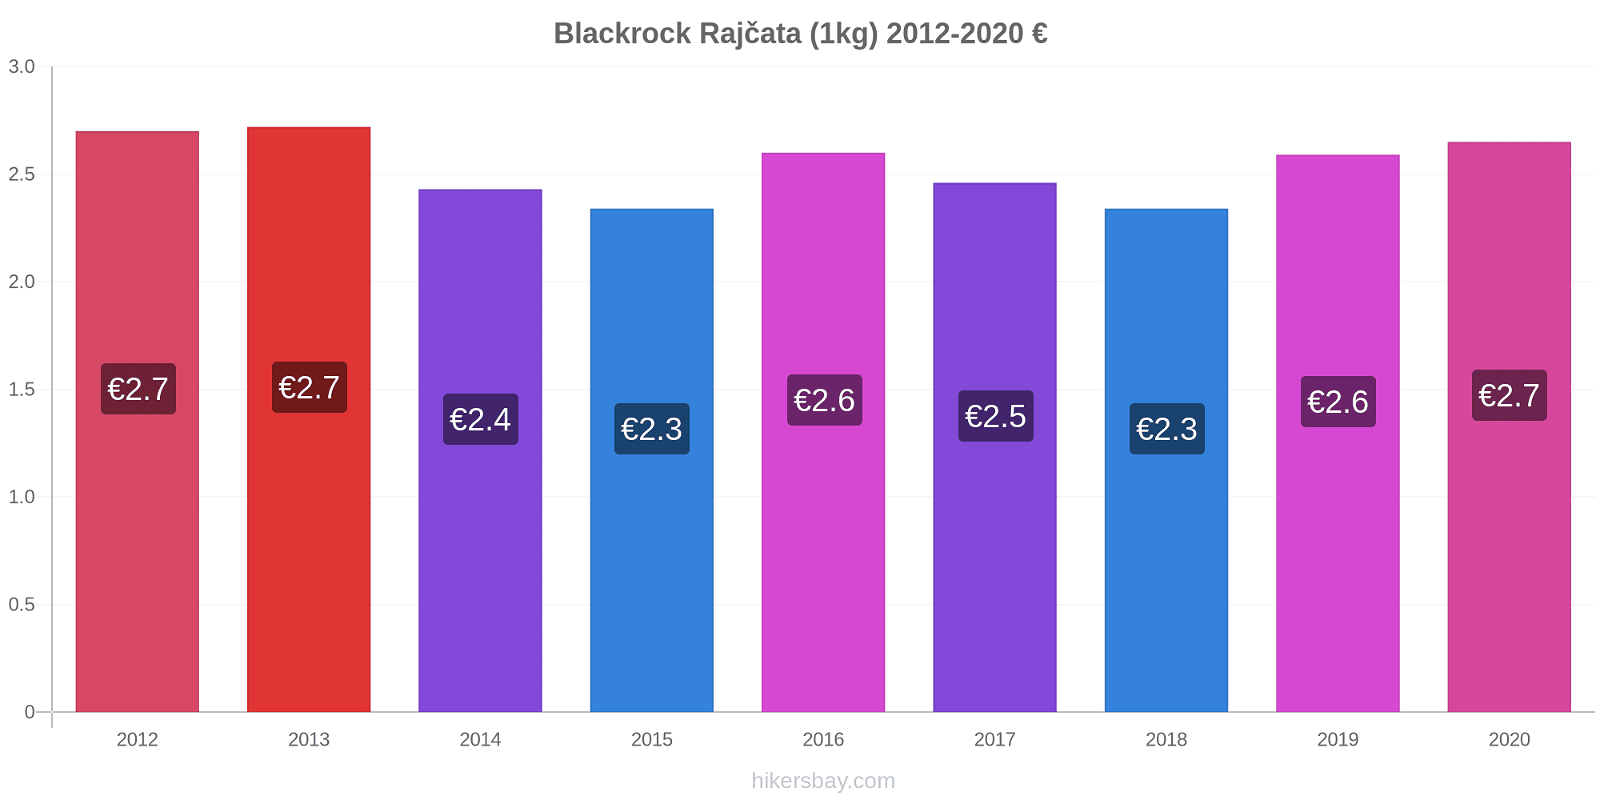 Blackrock změny cen Rajčata (1kg) hikersbay.com